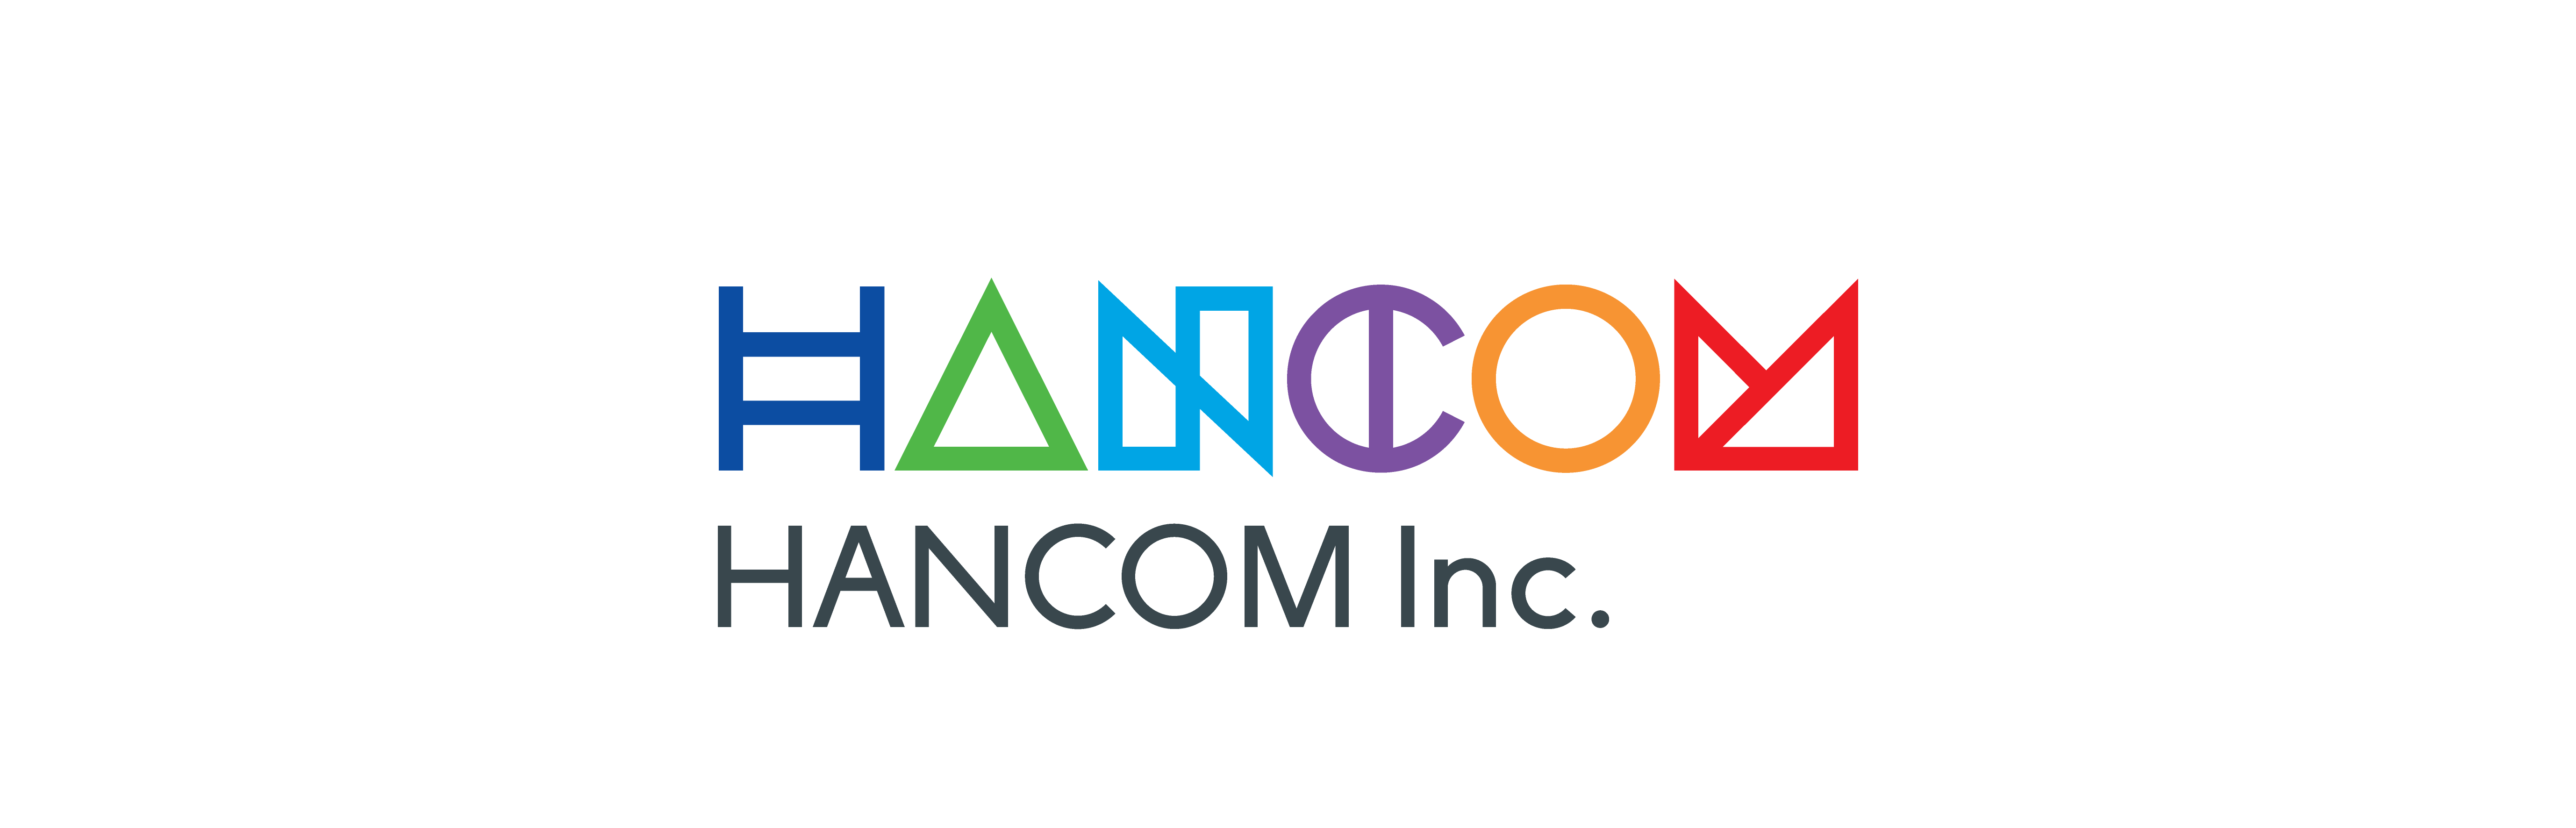 Hancom logo 2